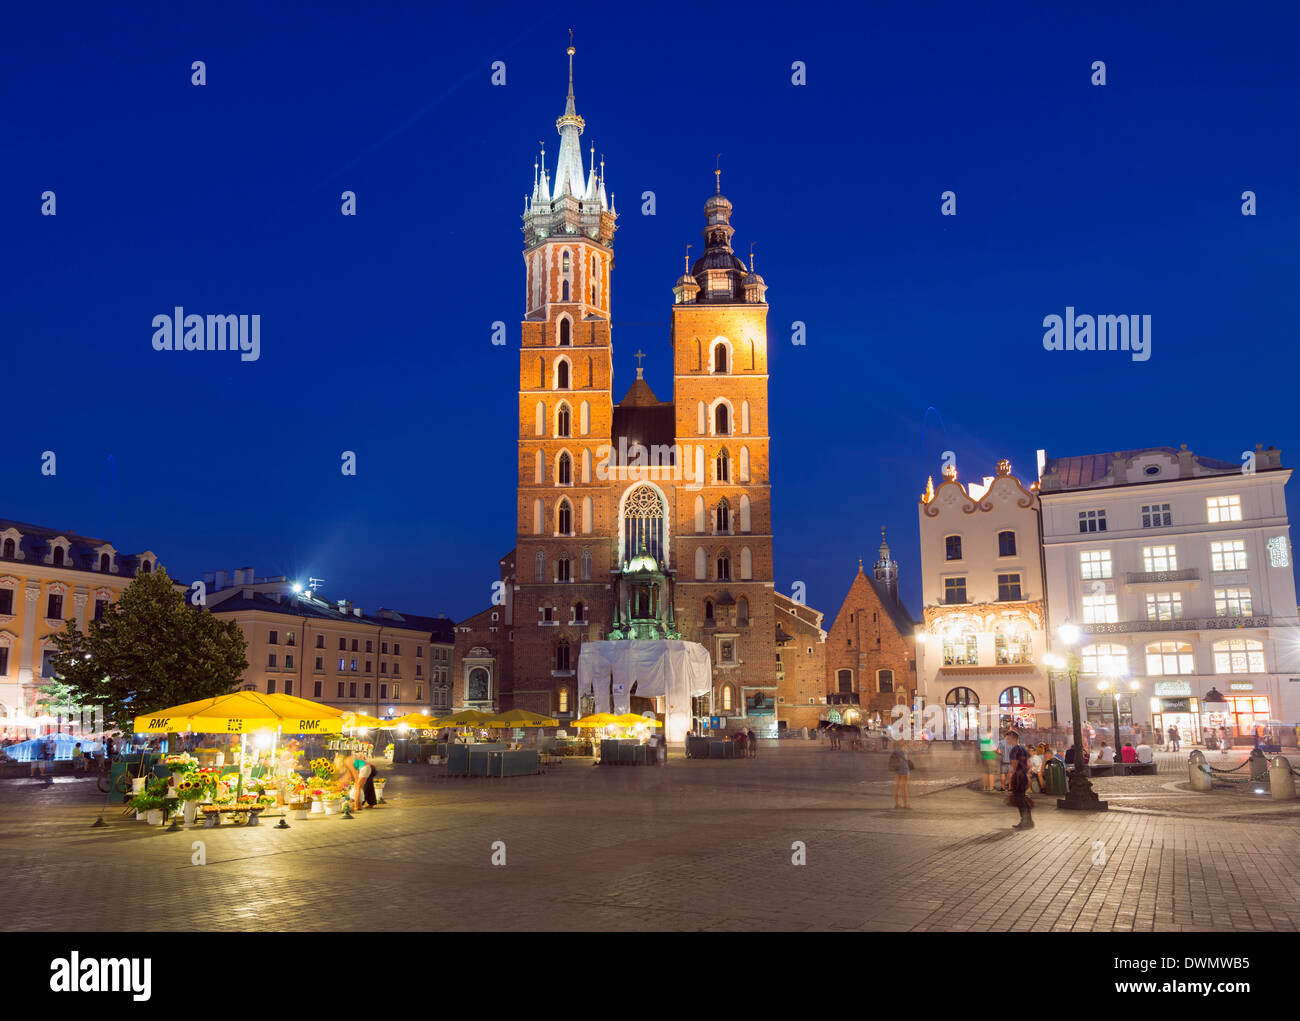 Rynek Glowny (Stadtplatz) und St. Marien Kirche, Altstadt, UNESCO World Heritage Site, Krakau, Kleinpolen, Polen, Europa Stockfoto